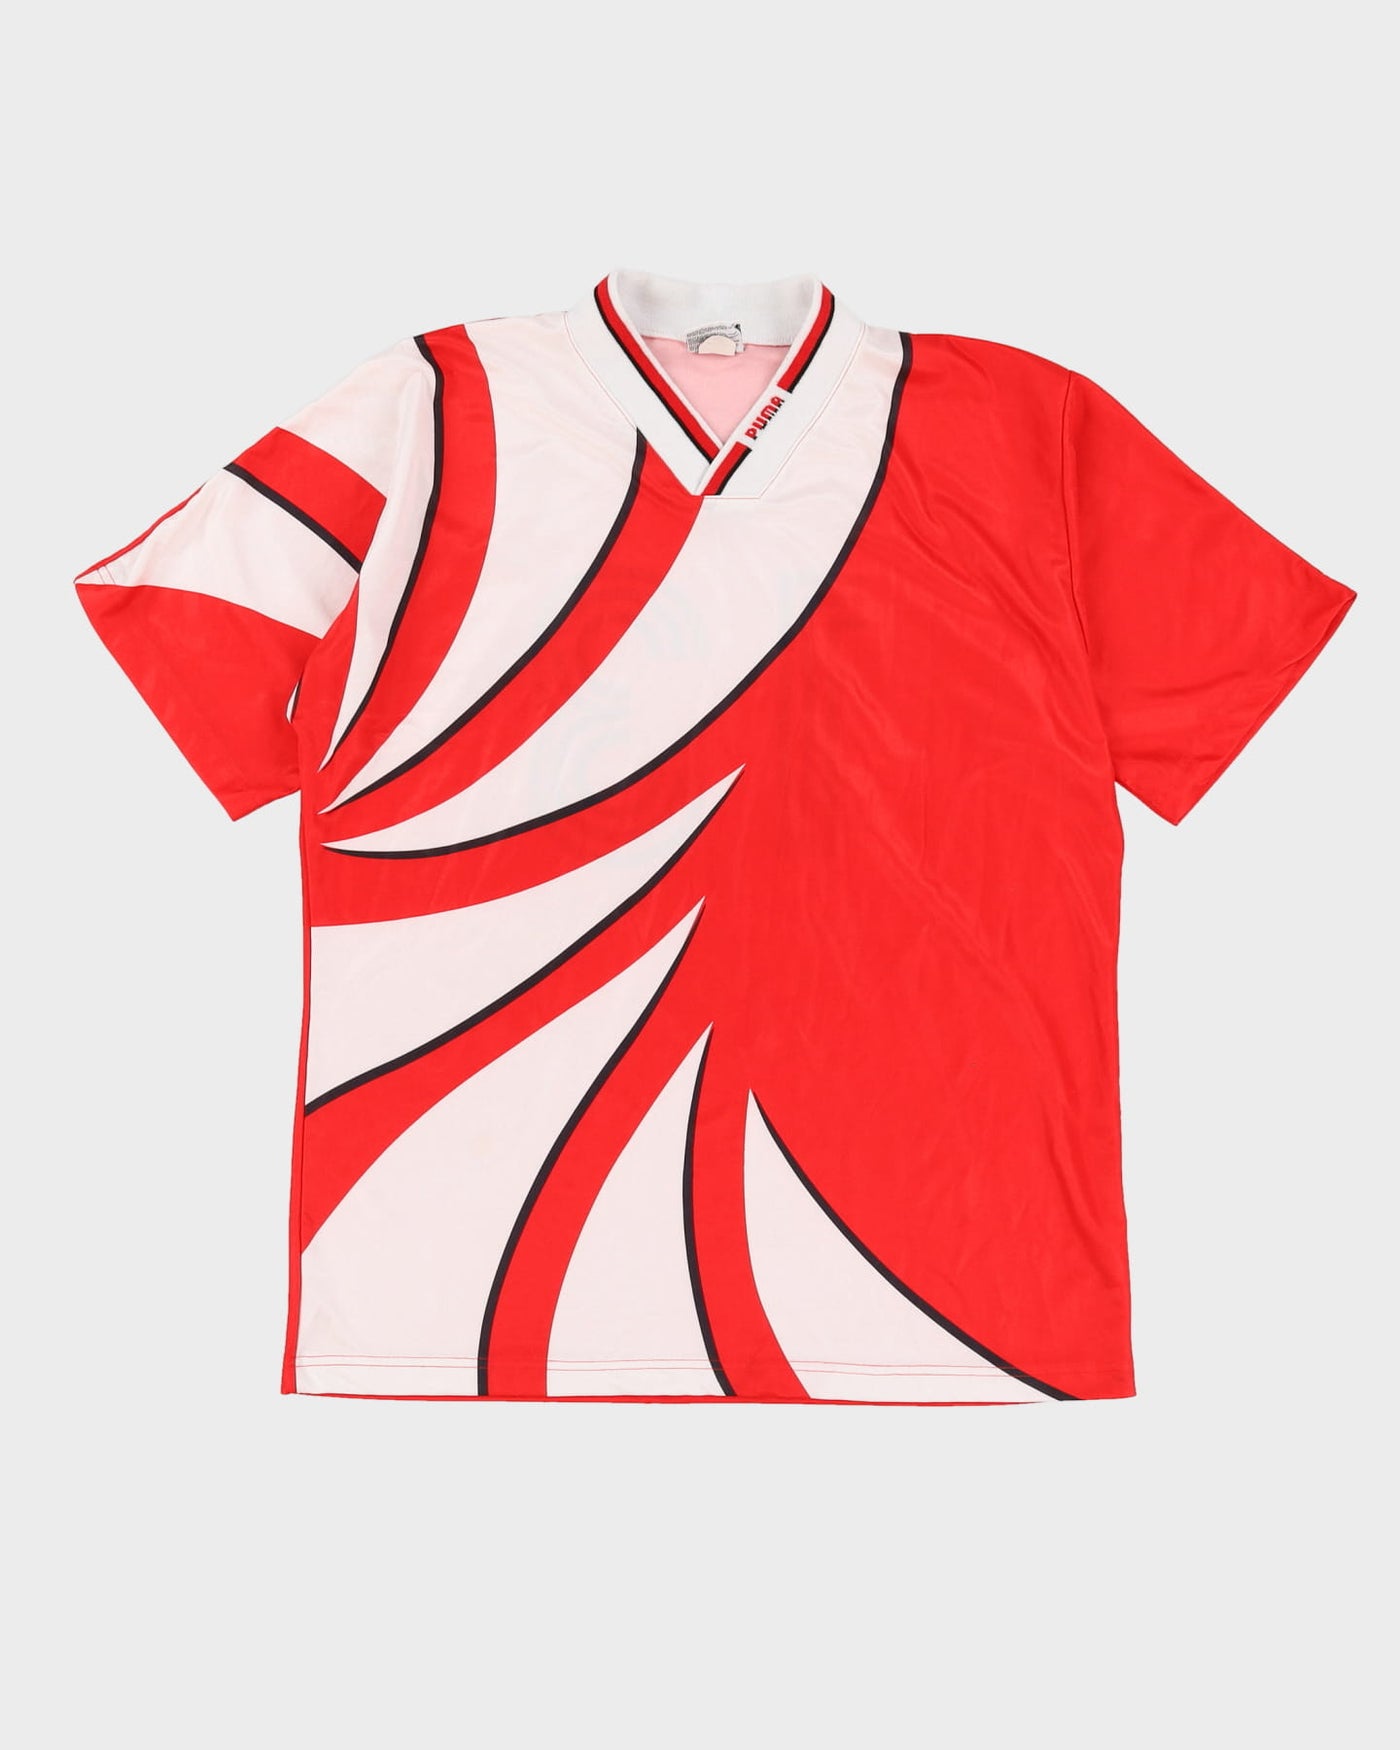 90s PUMA Red / White Training Football Shirt / Jersey - XL